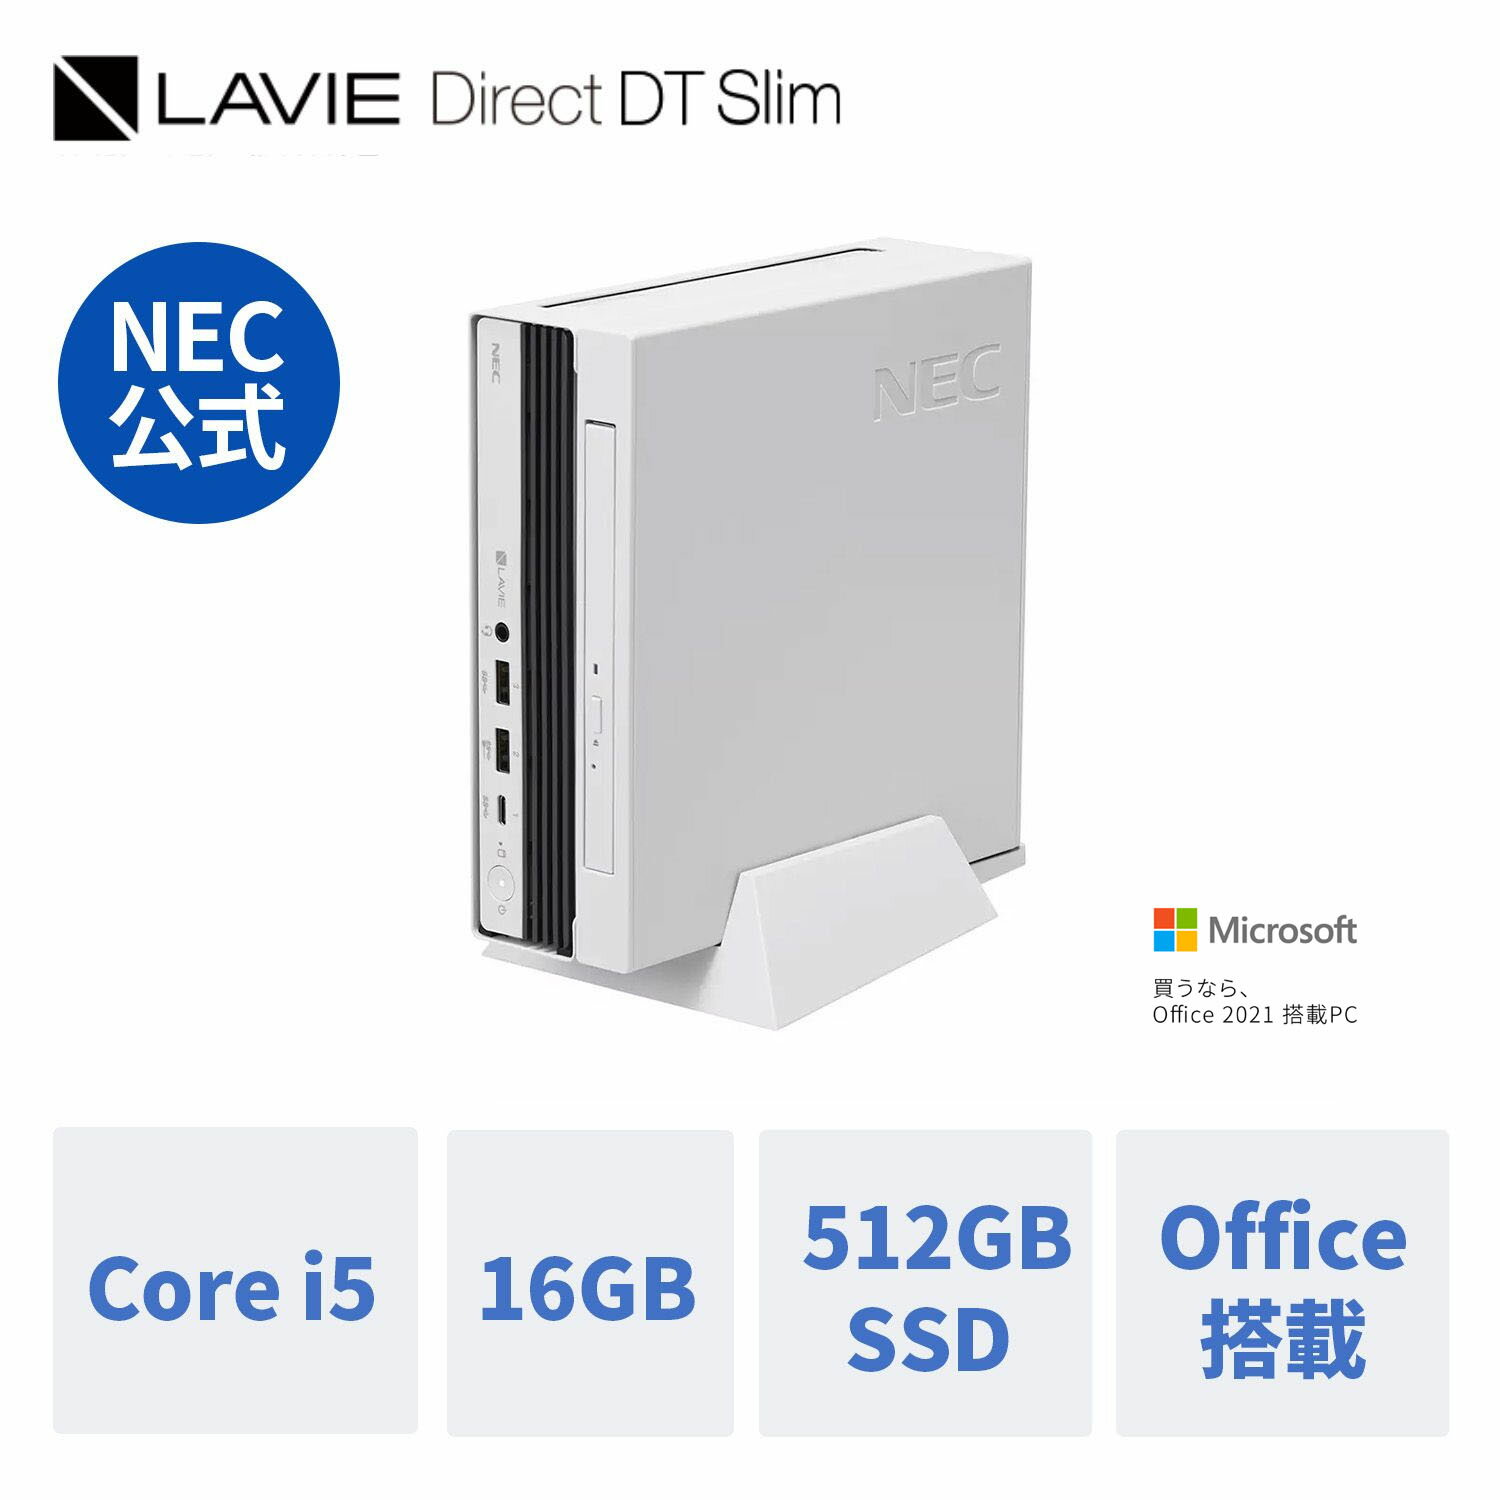 【Norton1】【DEAL10%】【公式・新品】NEC NEC ミニPC 小型 デスクトップパソコン office付き LAVIE Direct DTslim i5-13500T 16GBメモリ 512GB SSD 24インチ モニター Windows 11 Home 1年保証 送料無料 yxe